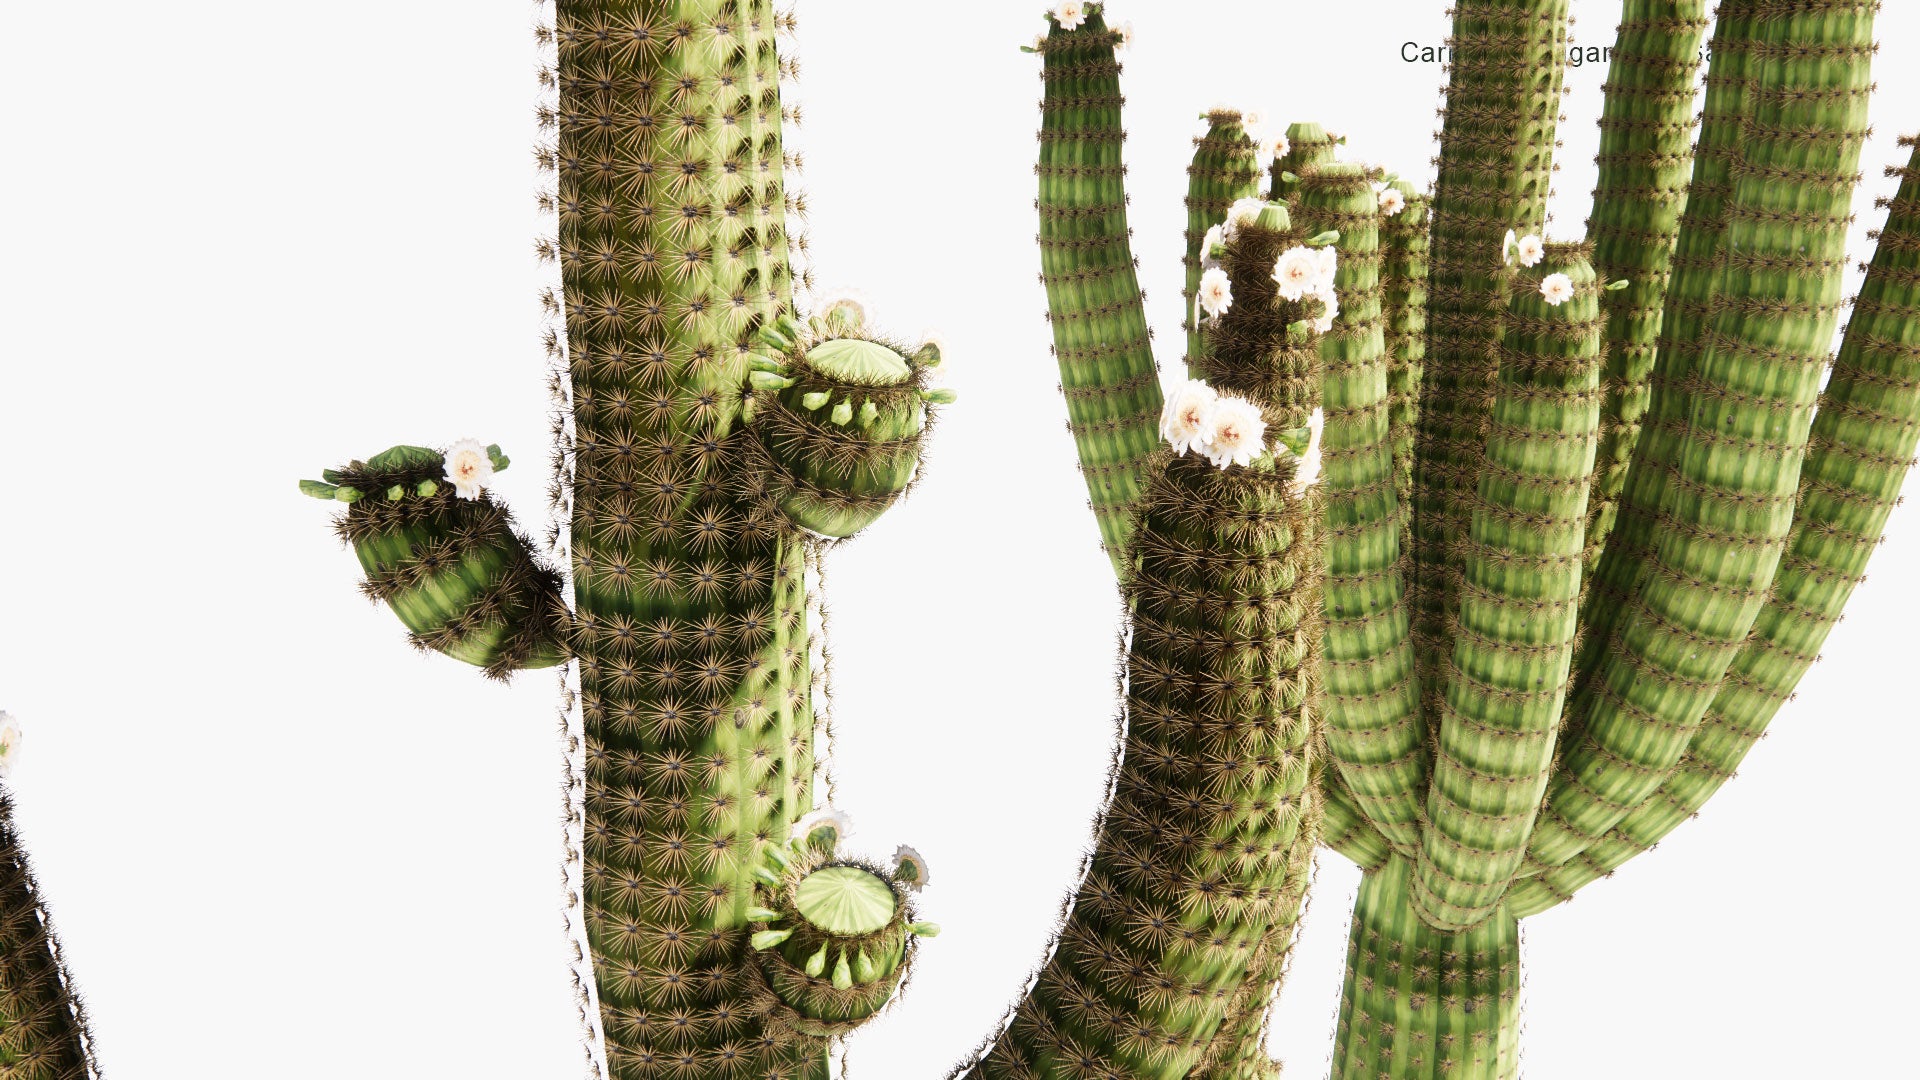 Low Poly Carnegiea Gigantea - Saguaro (3D Model)